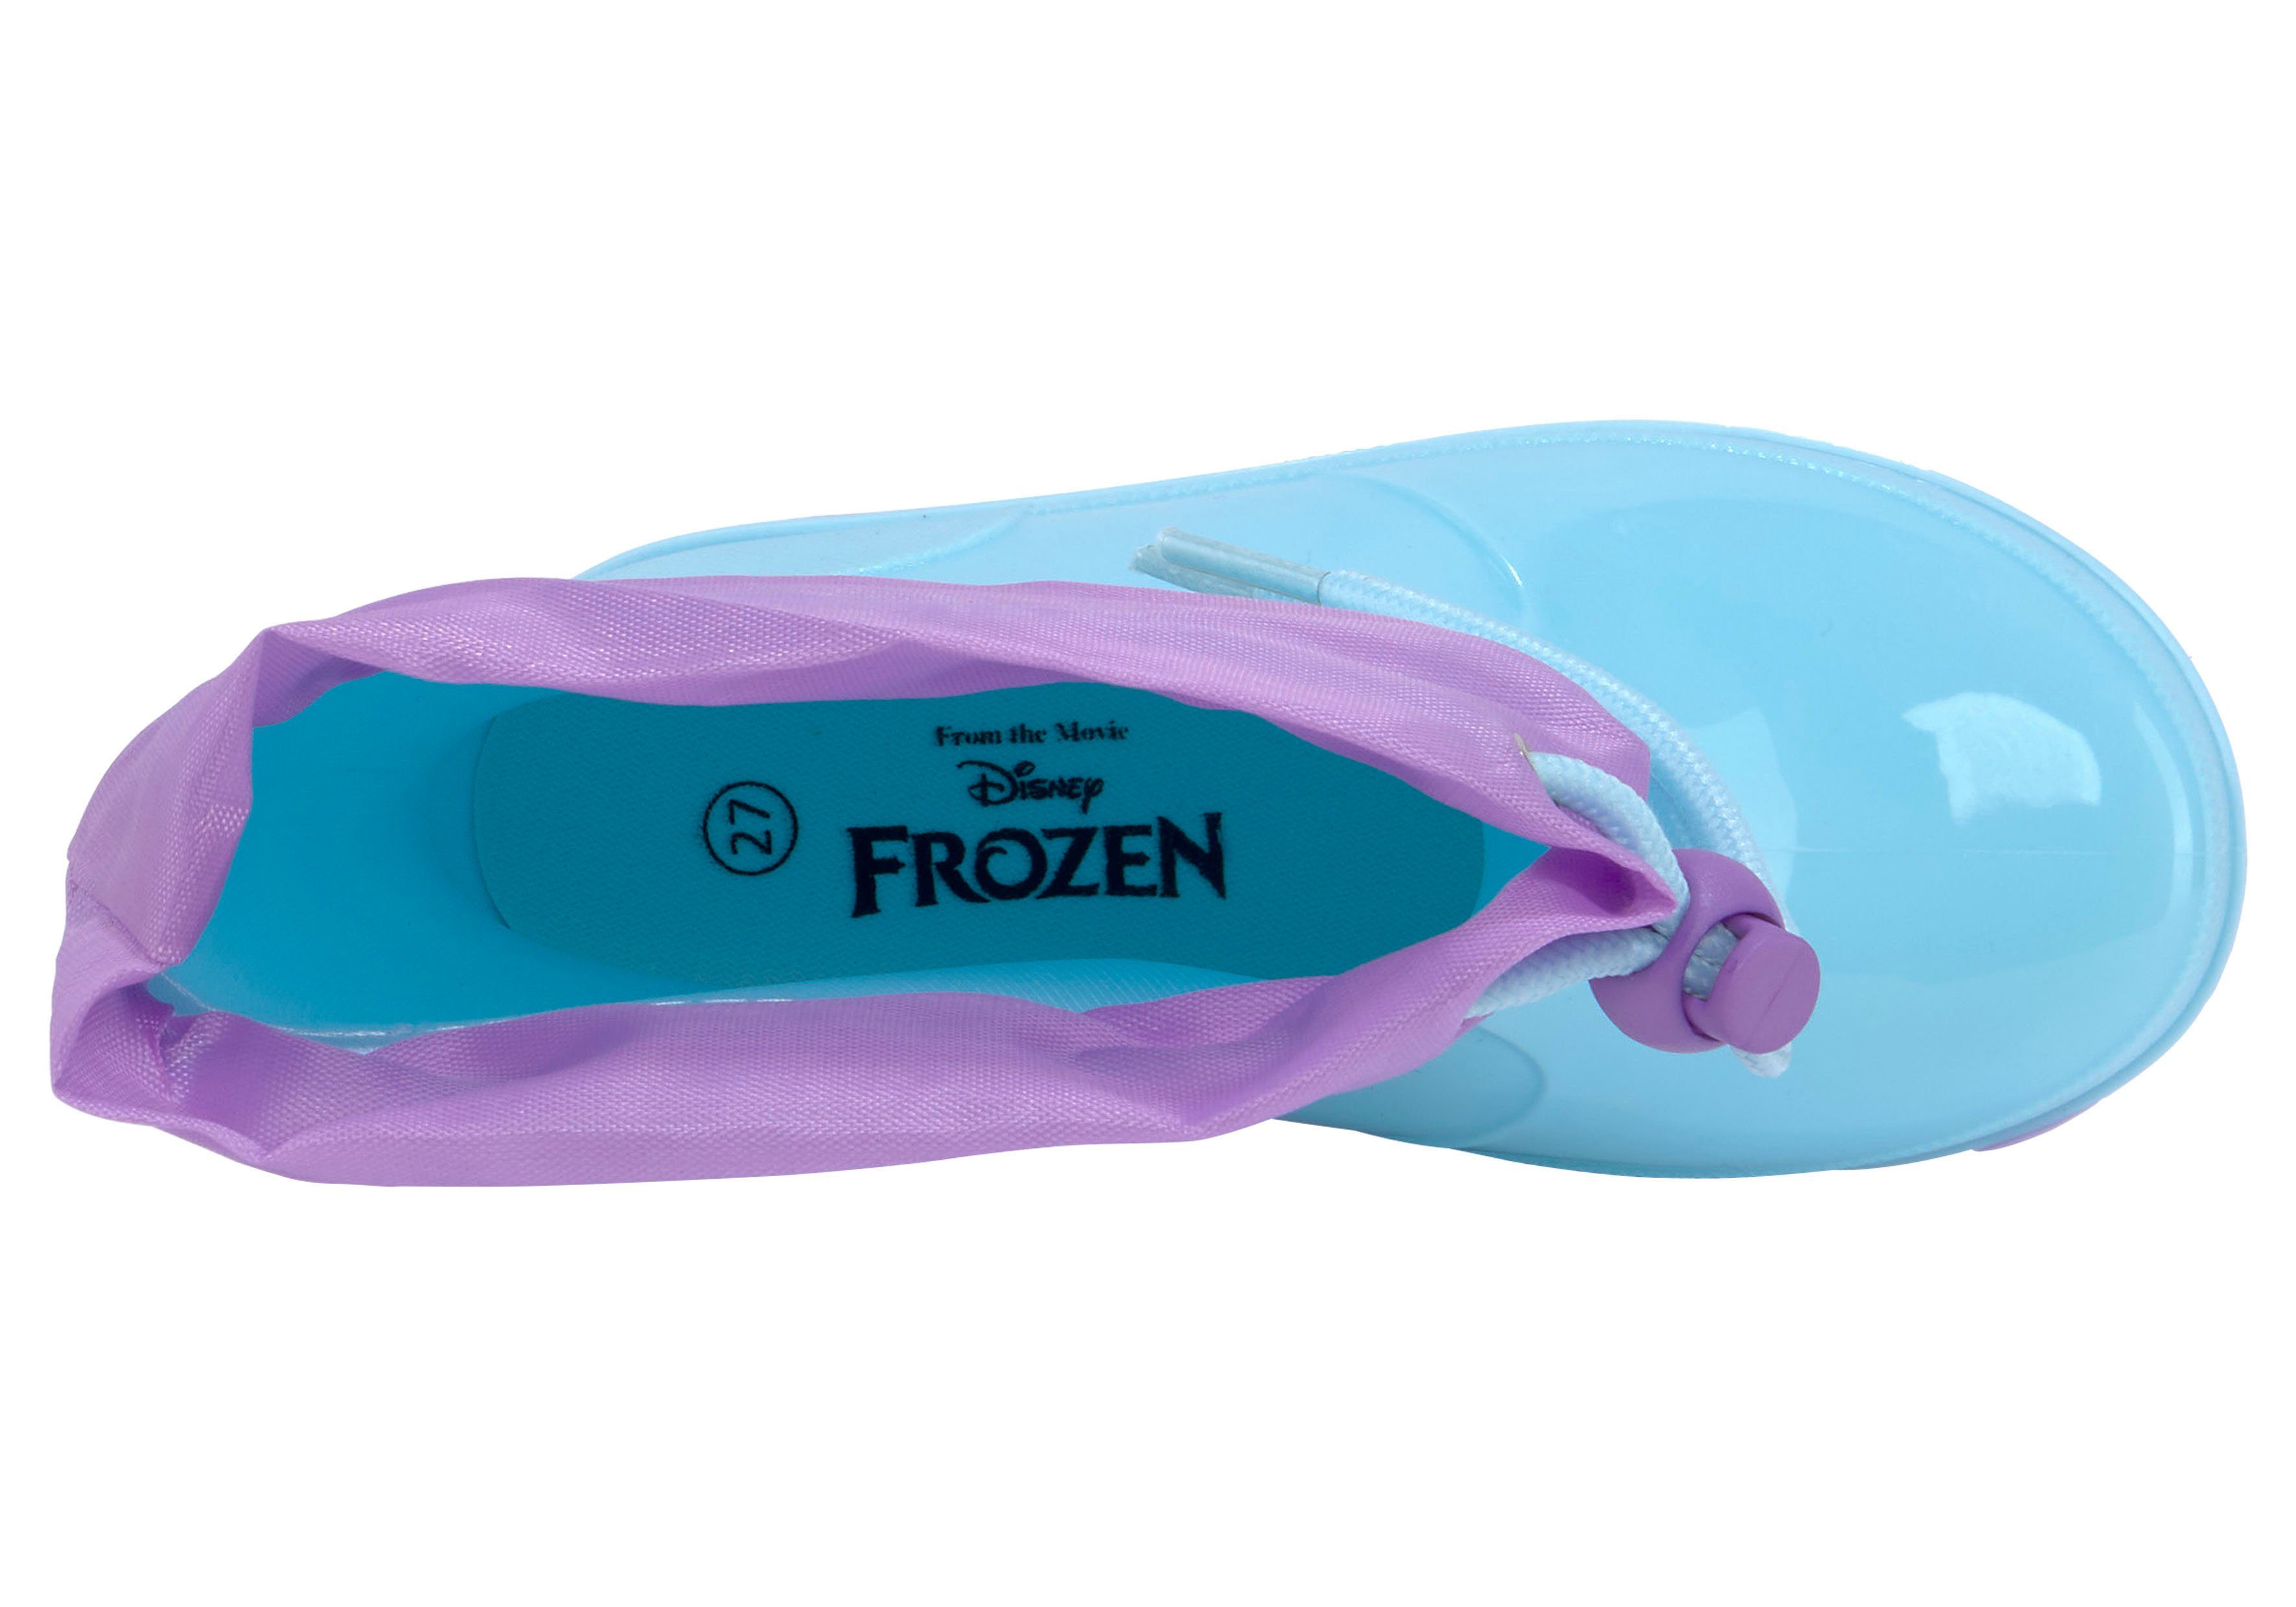 Gummistiefel Disney Frozen